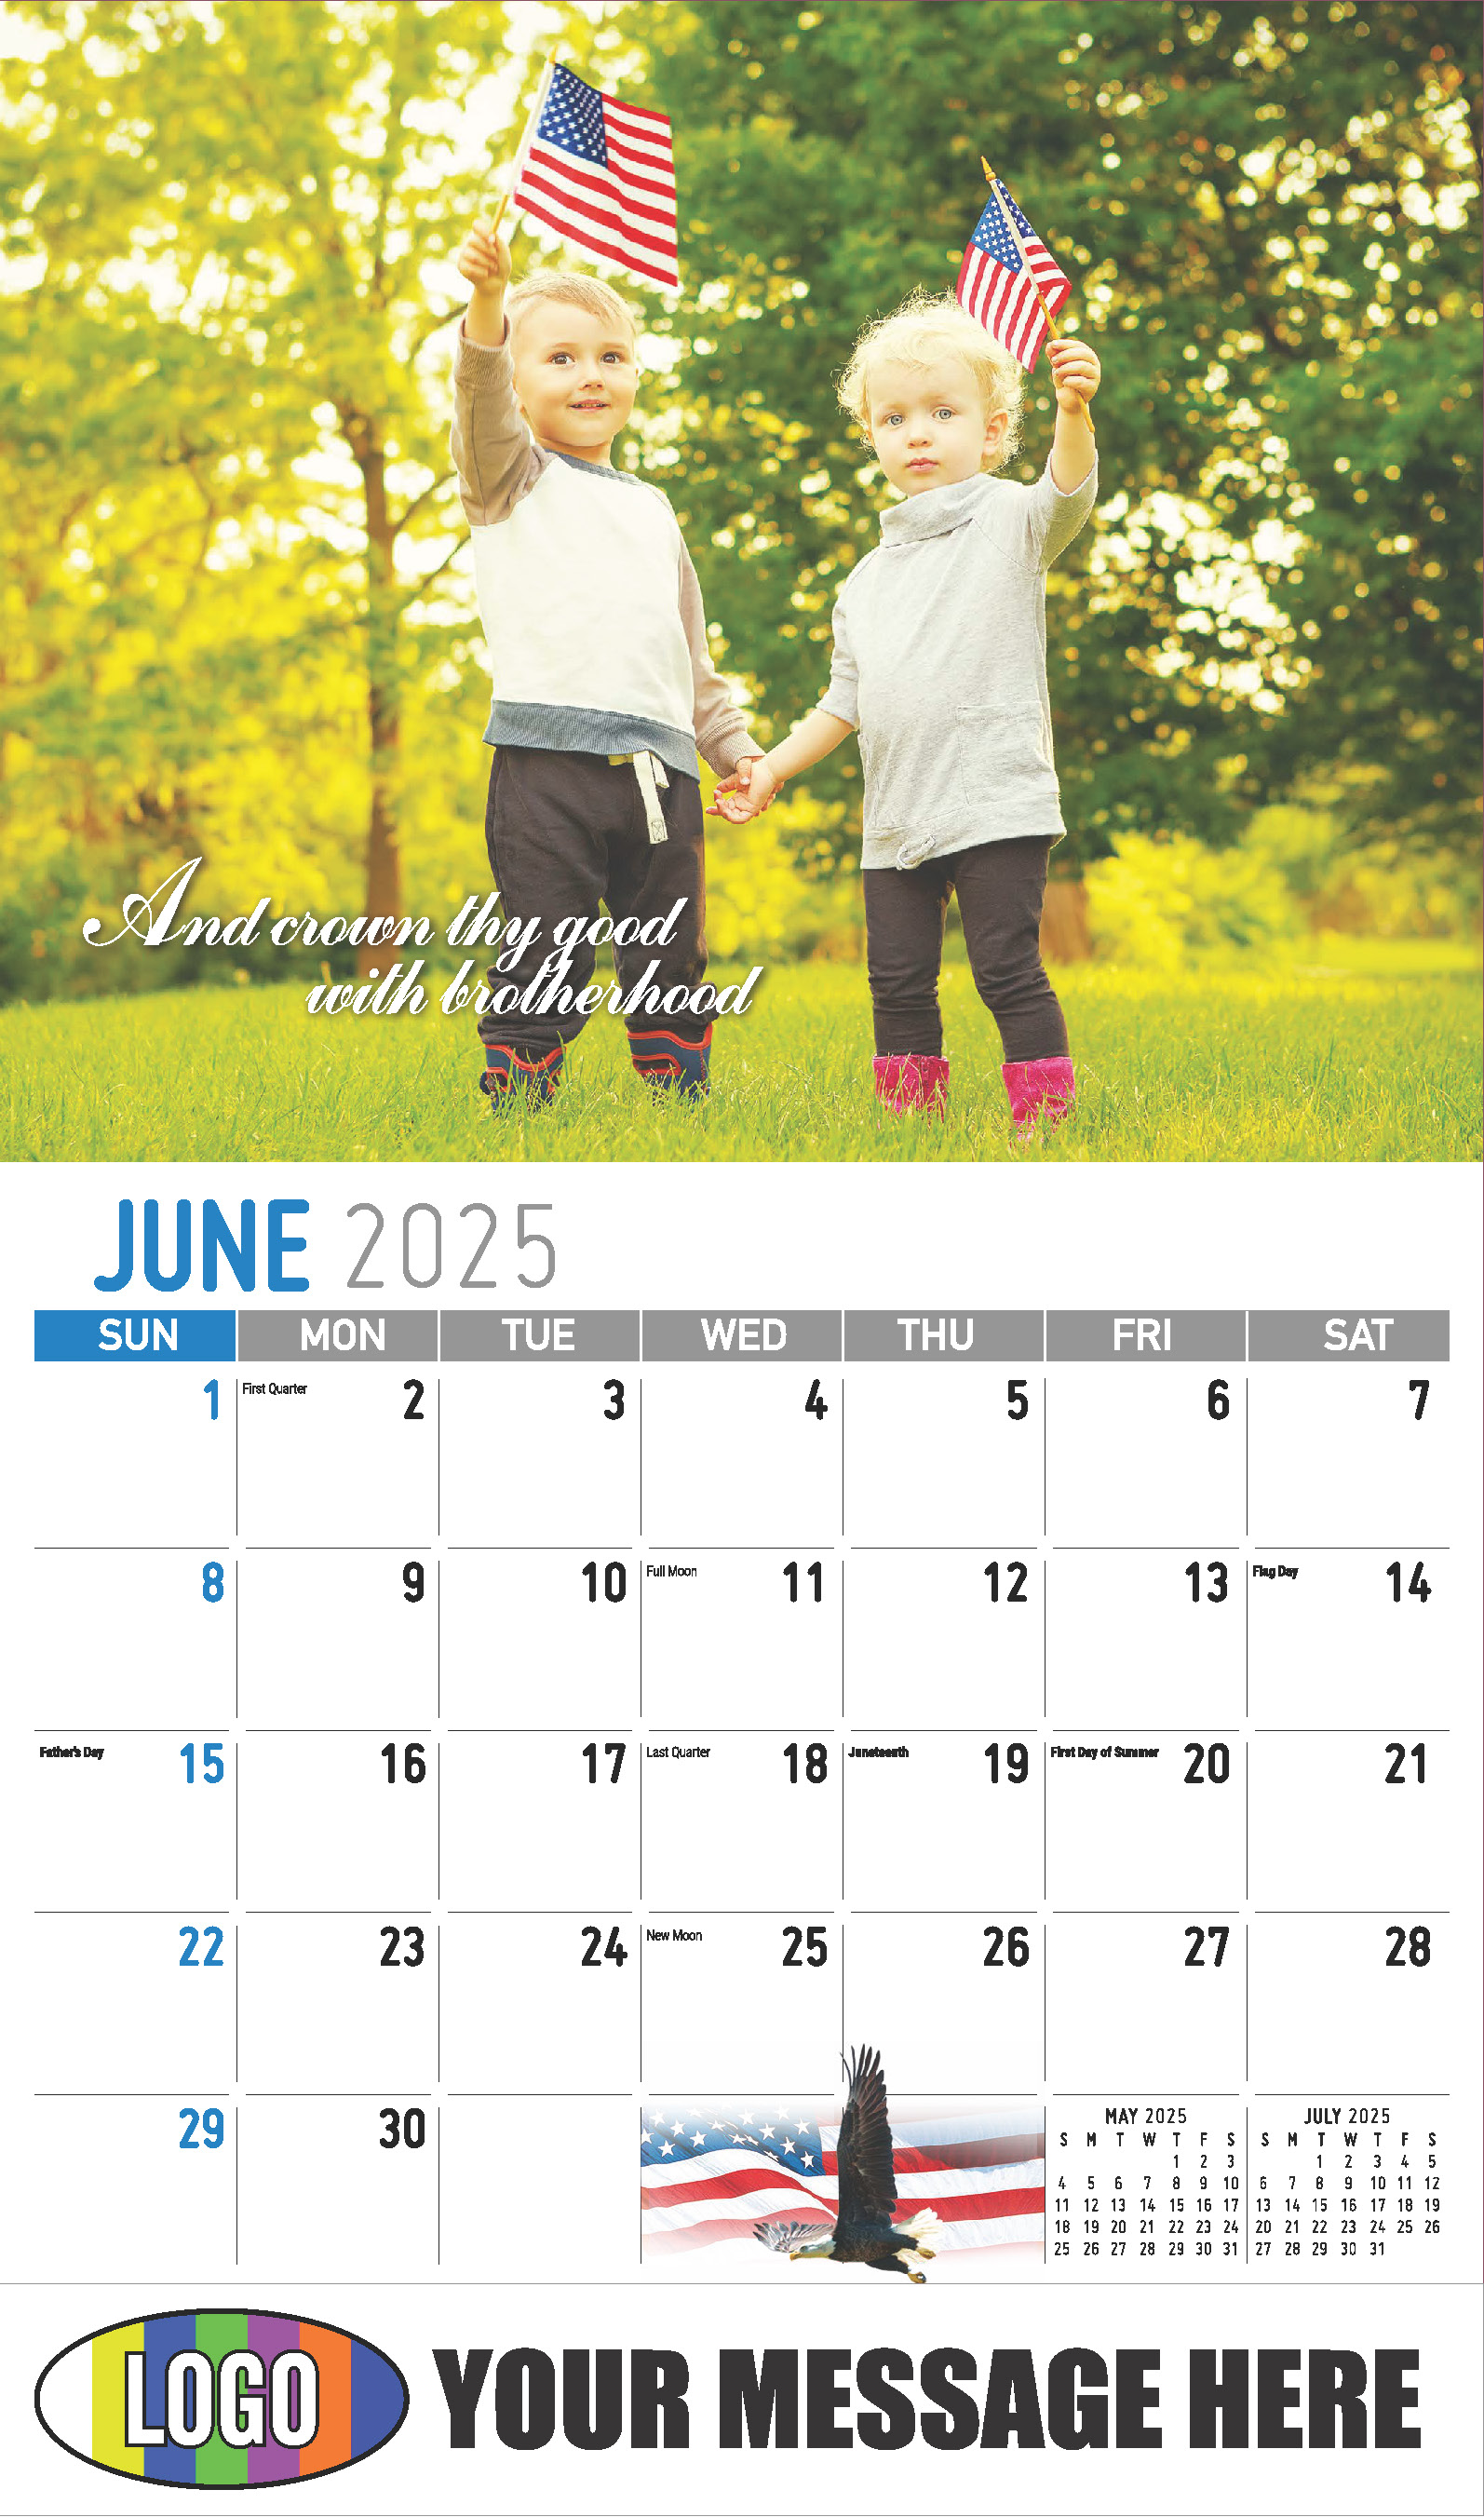 America the Beautiful  2025 Business Advertising Wall Calendar - June